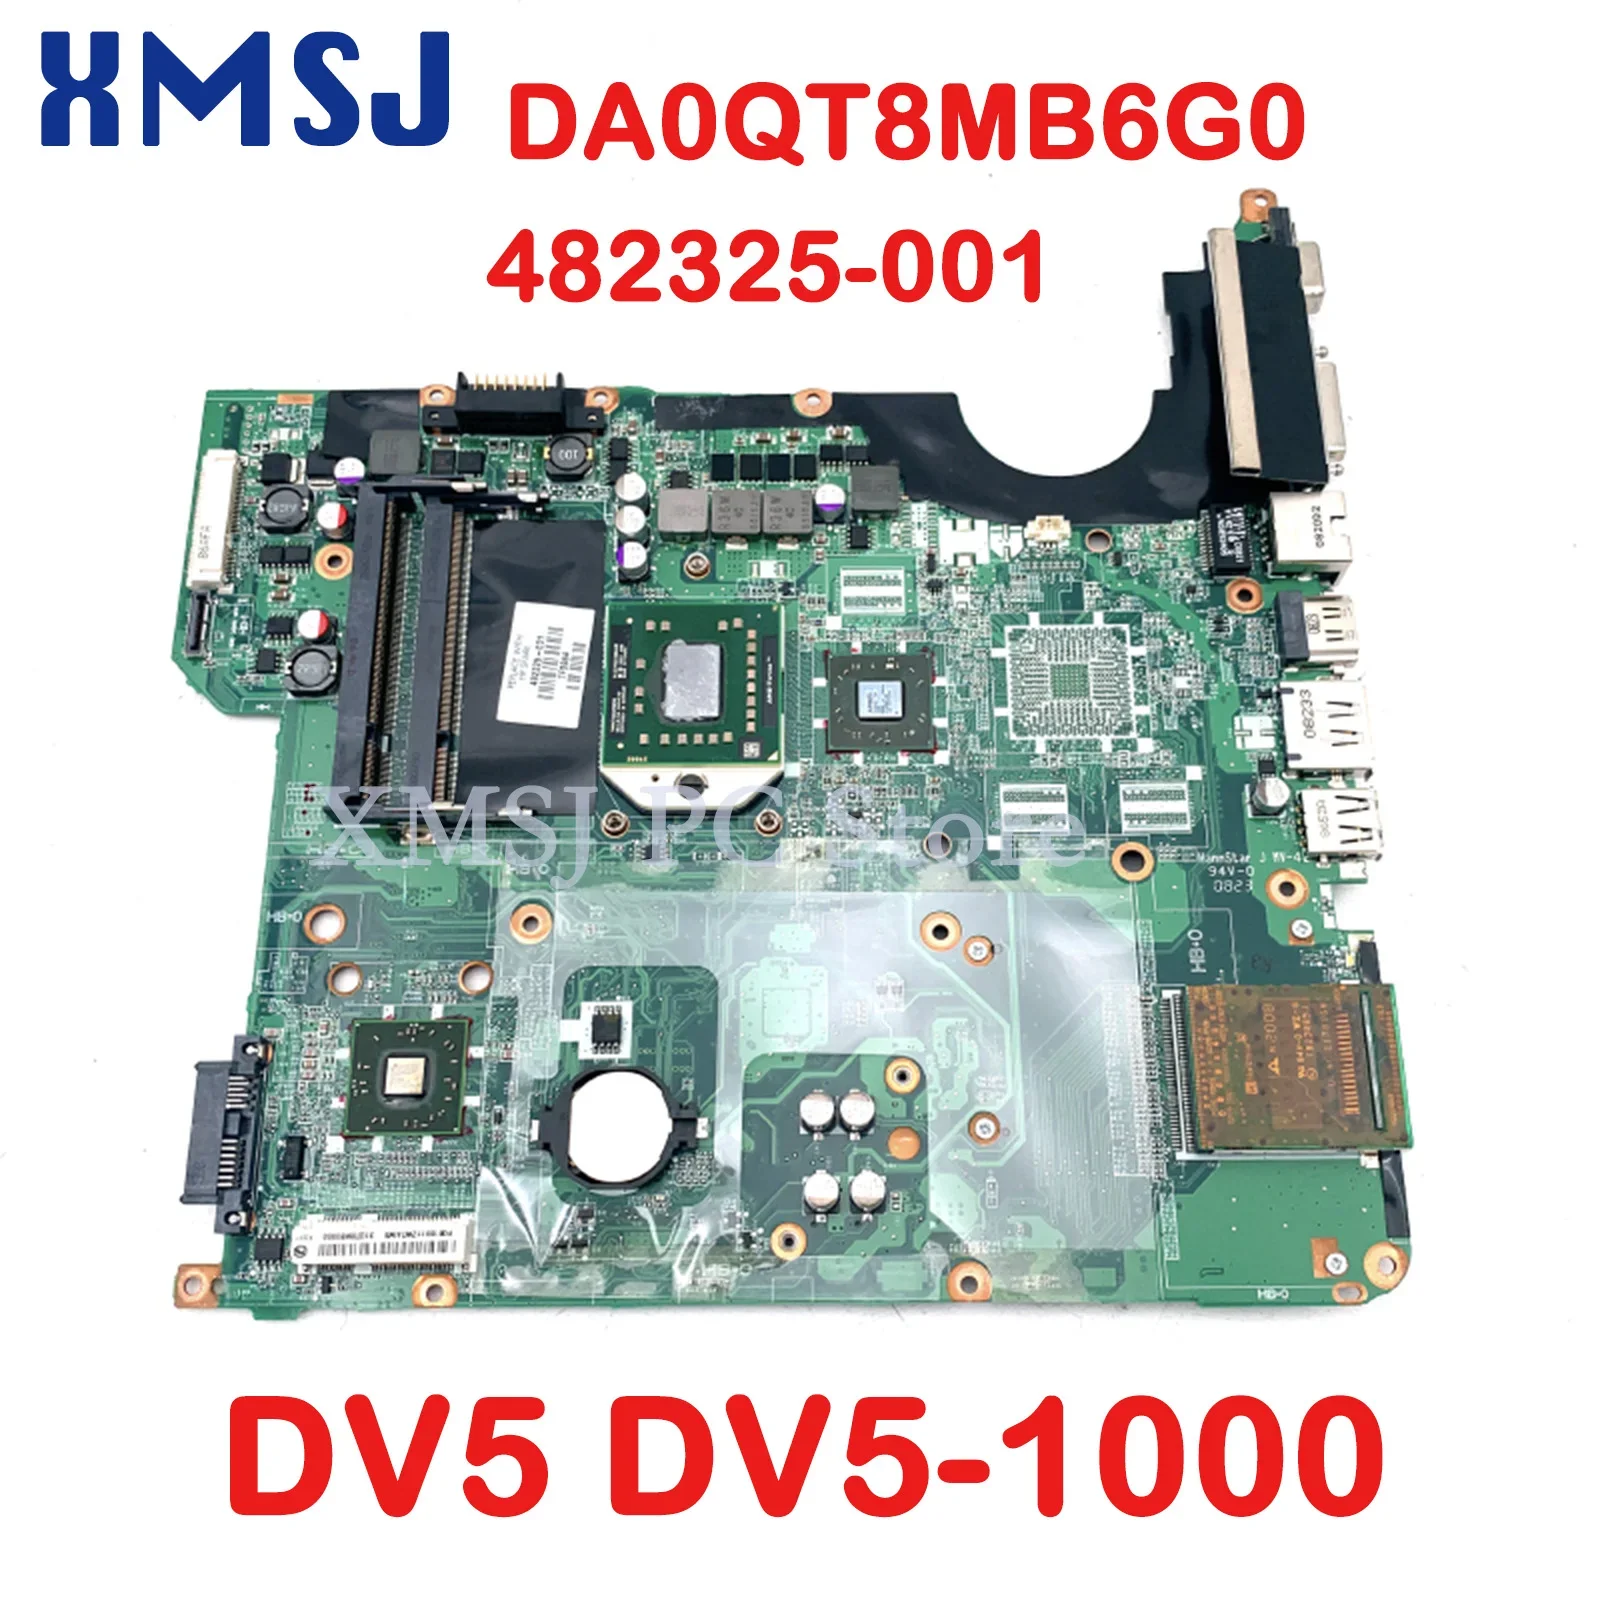 

XMSJ For HP Pavilion DV5 DV5-1000 Laptop Motherboard 482325-001 DA0QT8MB6G0 DDR2 Socket S1 Free CPU Fully Tested Main Board